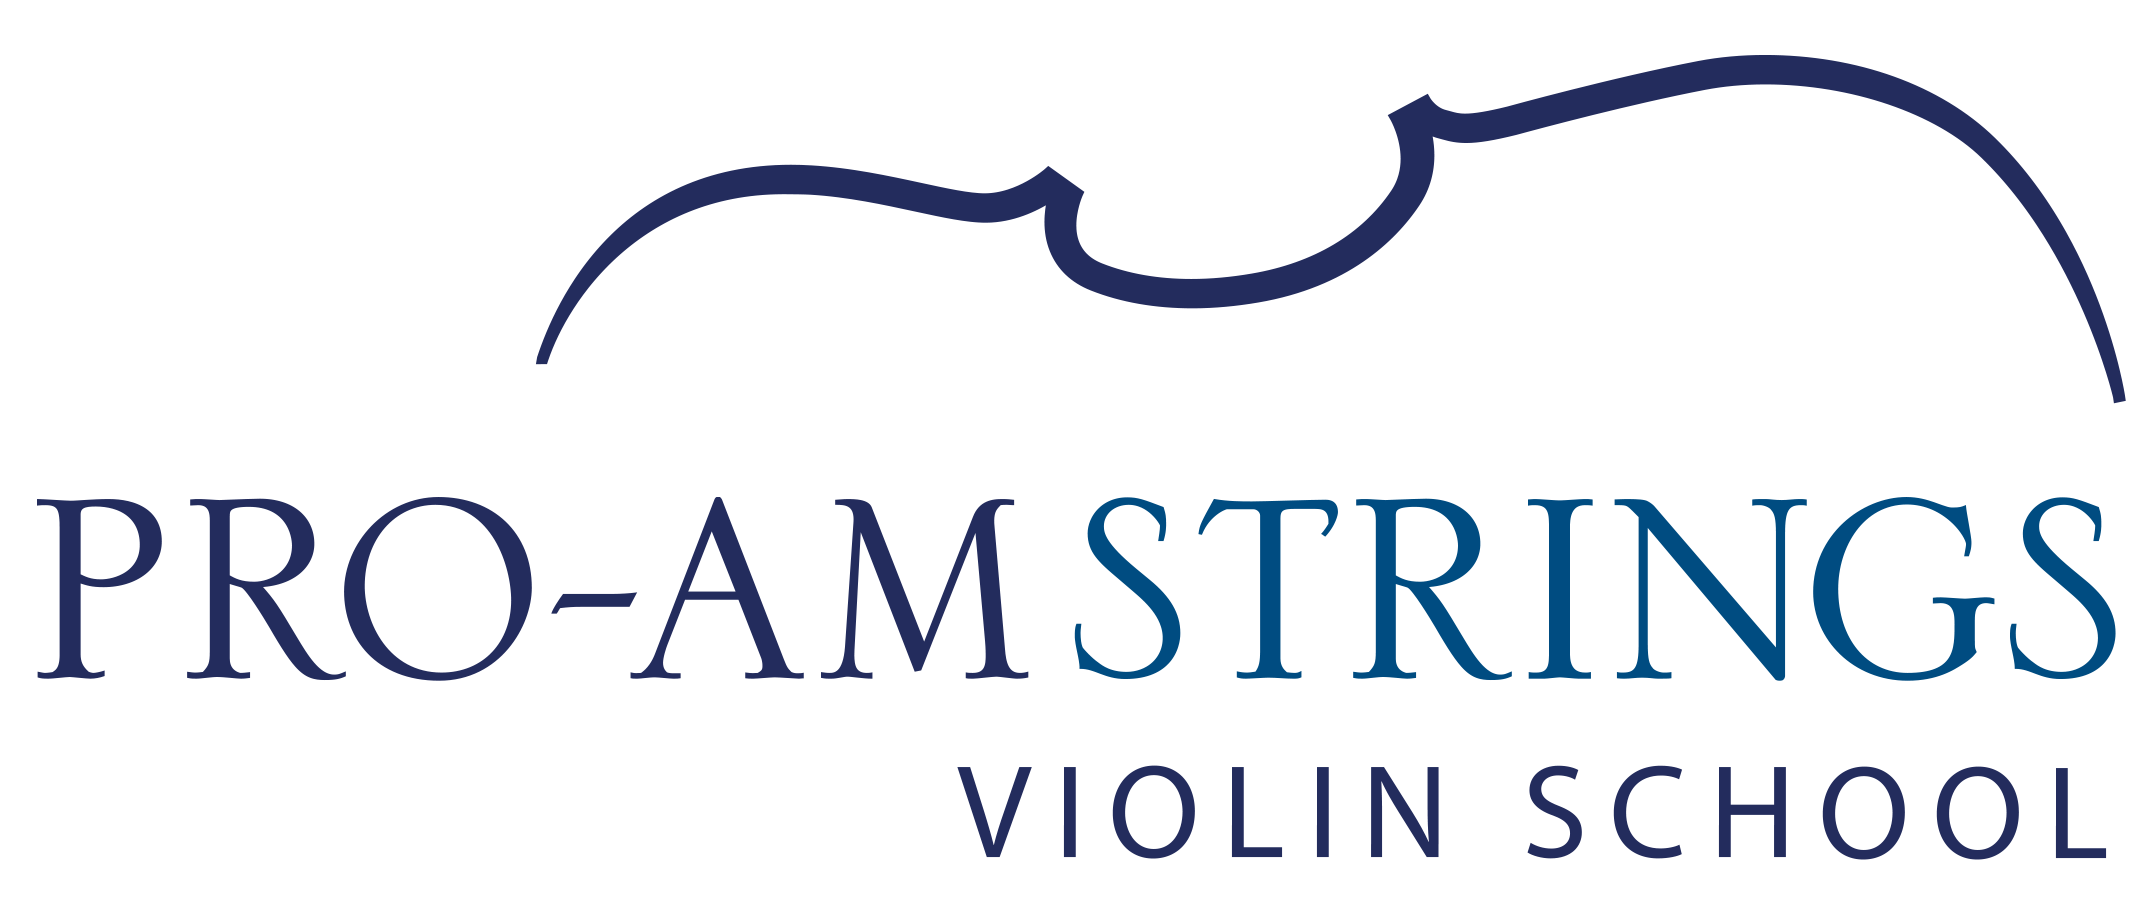 Pro-Am Strings Violin School